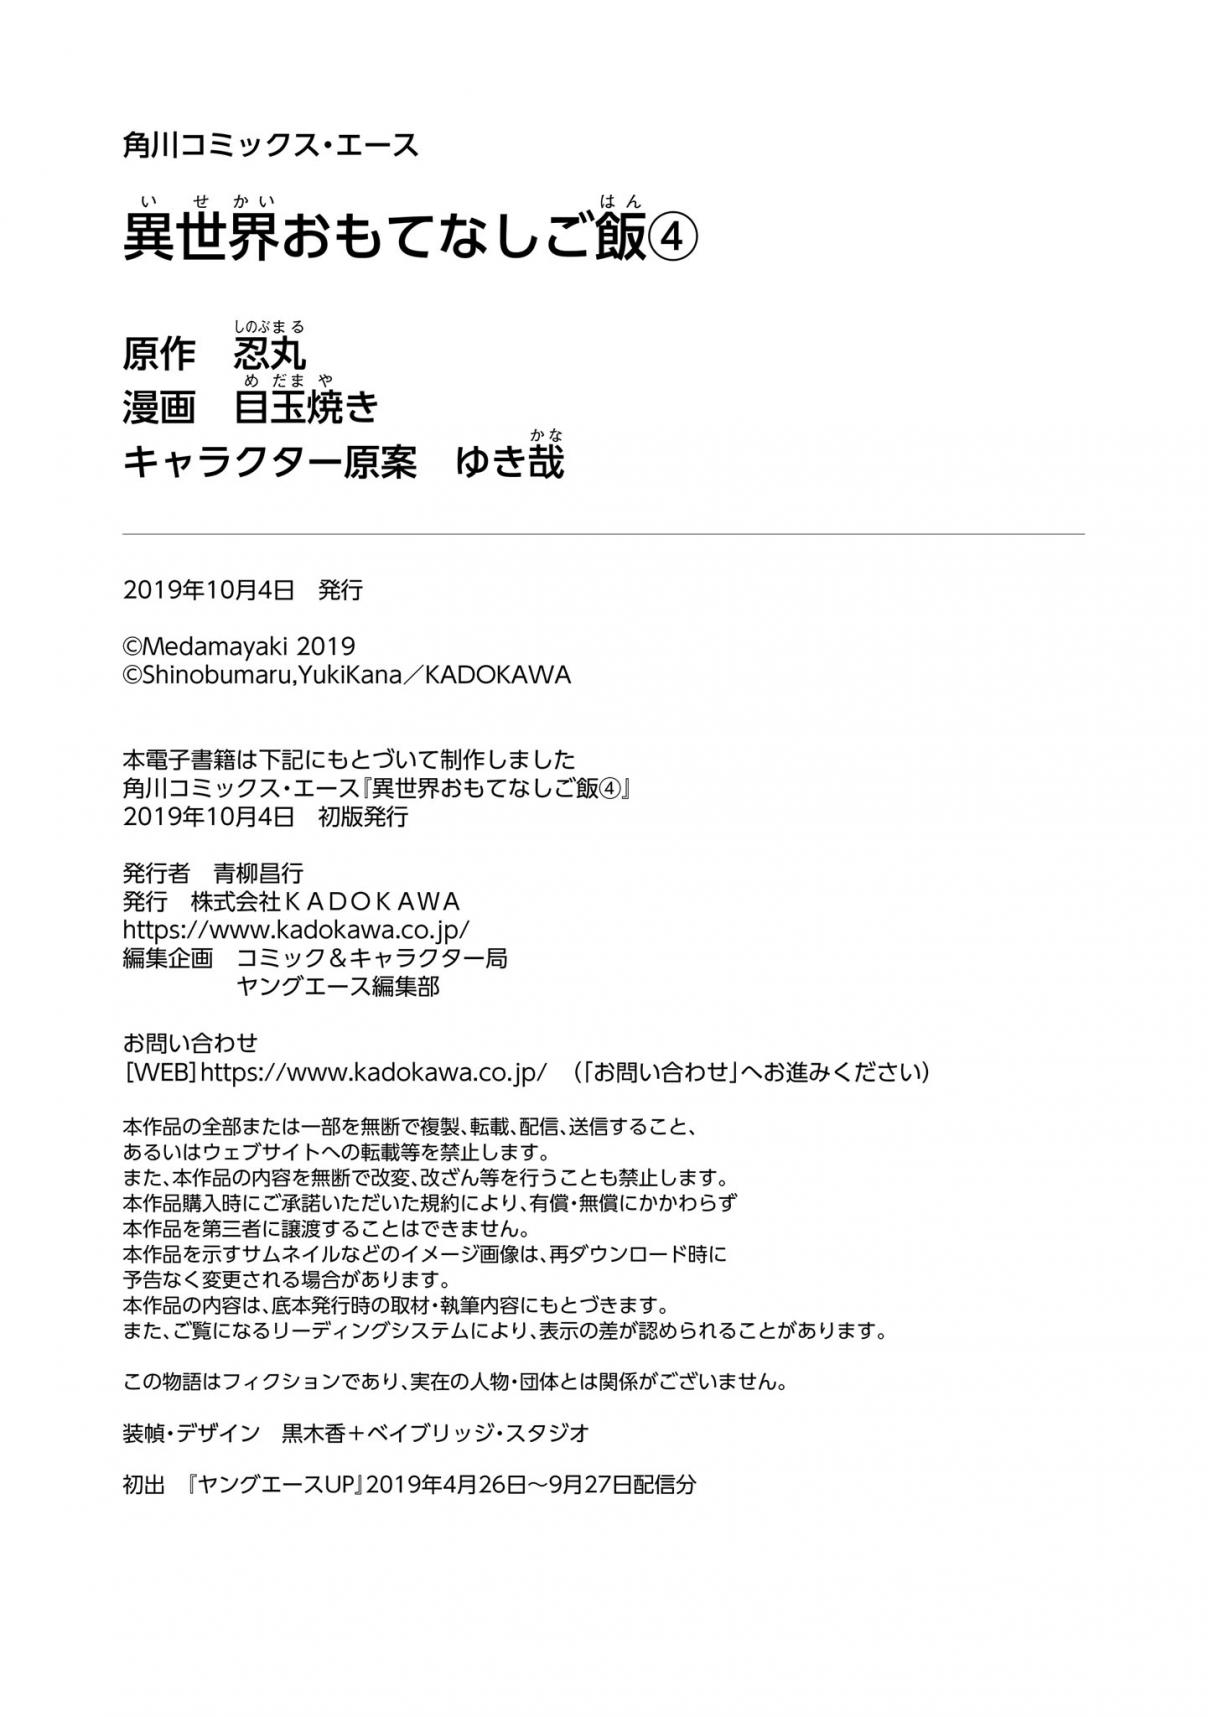 Isekai Omotenashi Gohan Vol. 4 Ch. 21.5 Volume 4 Extras